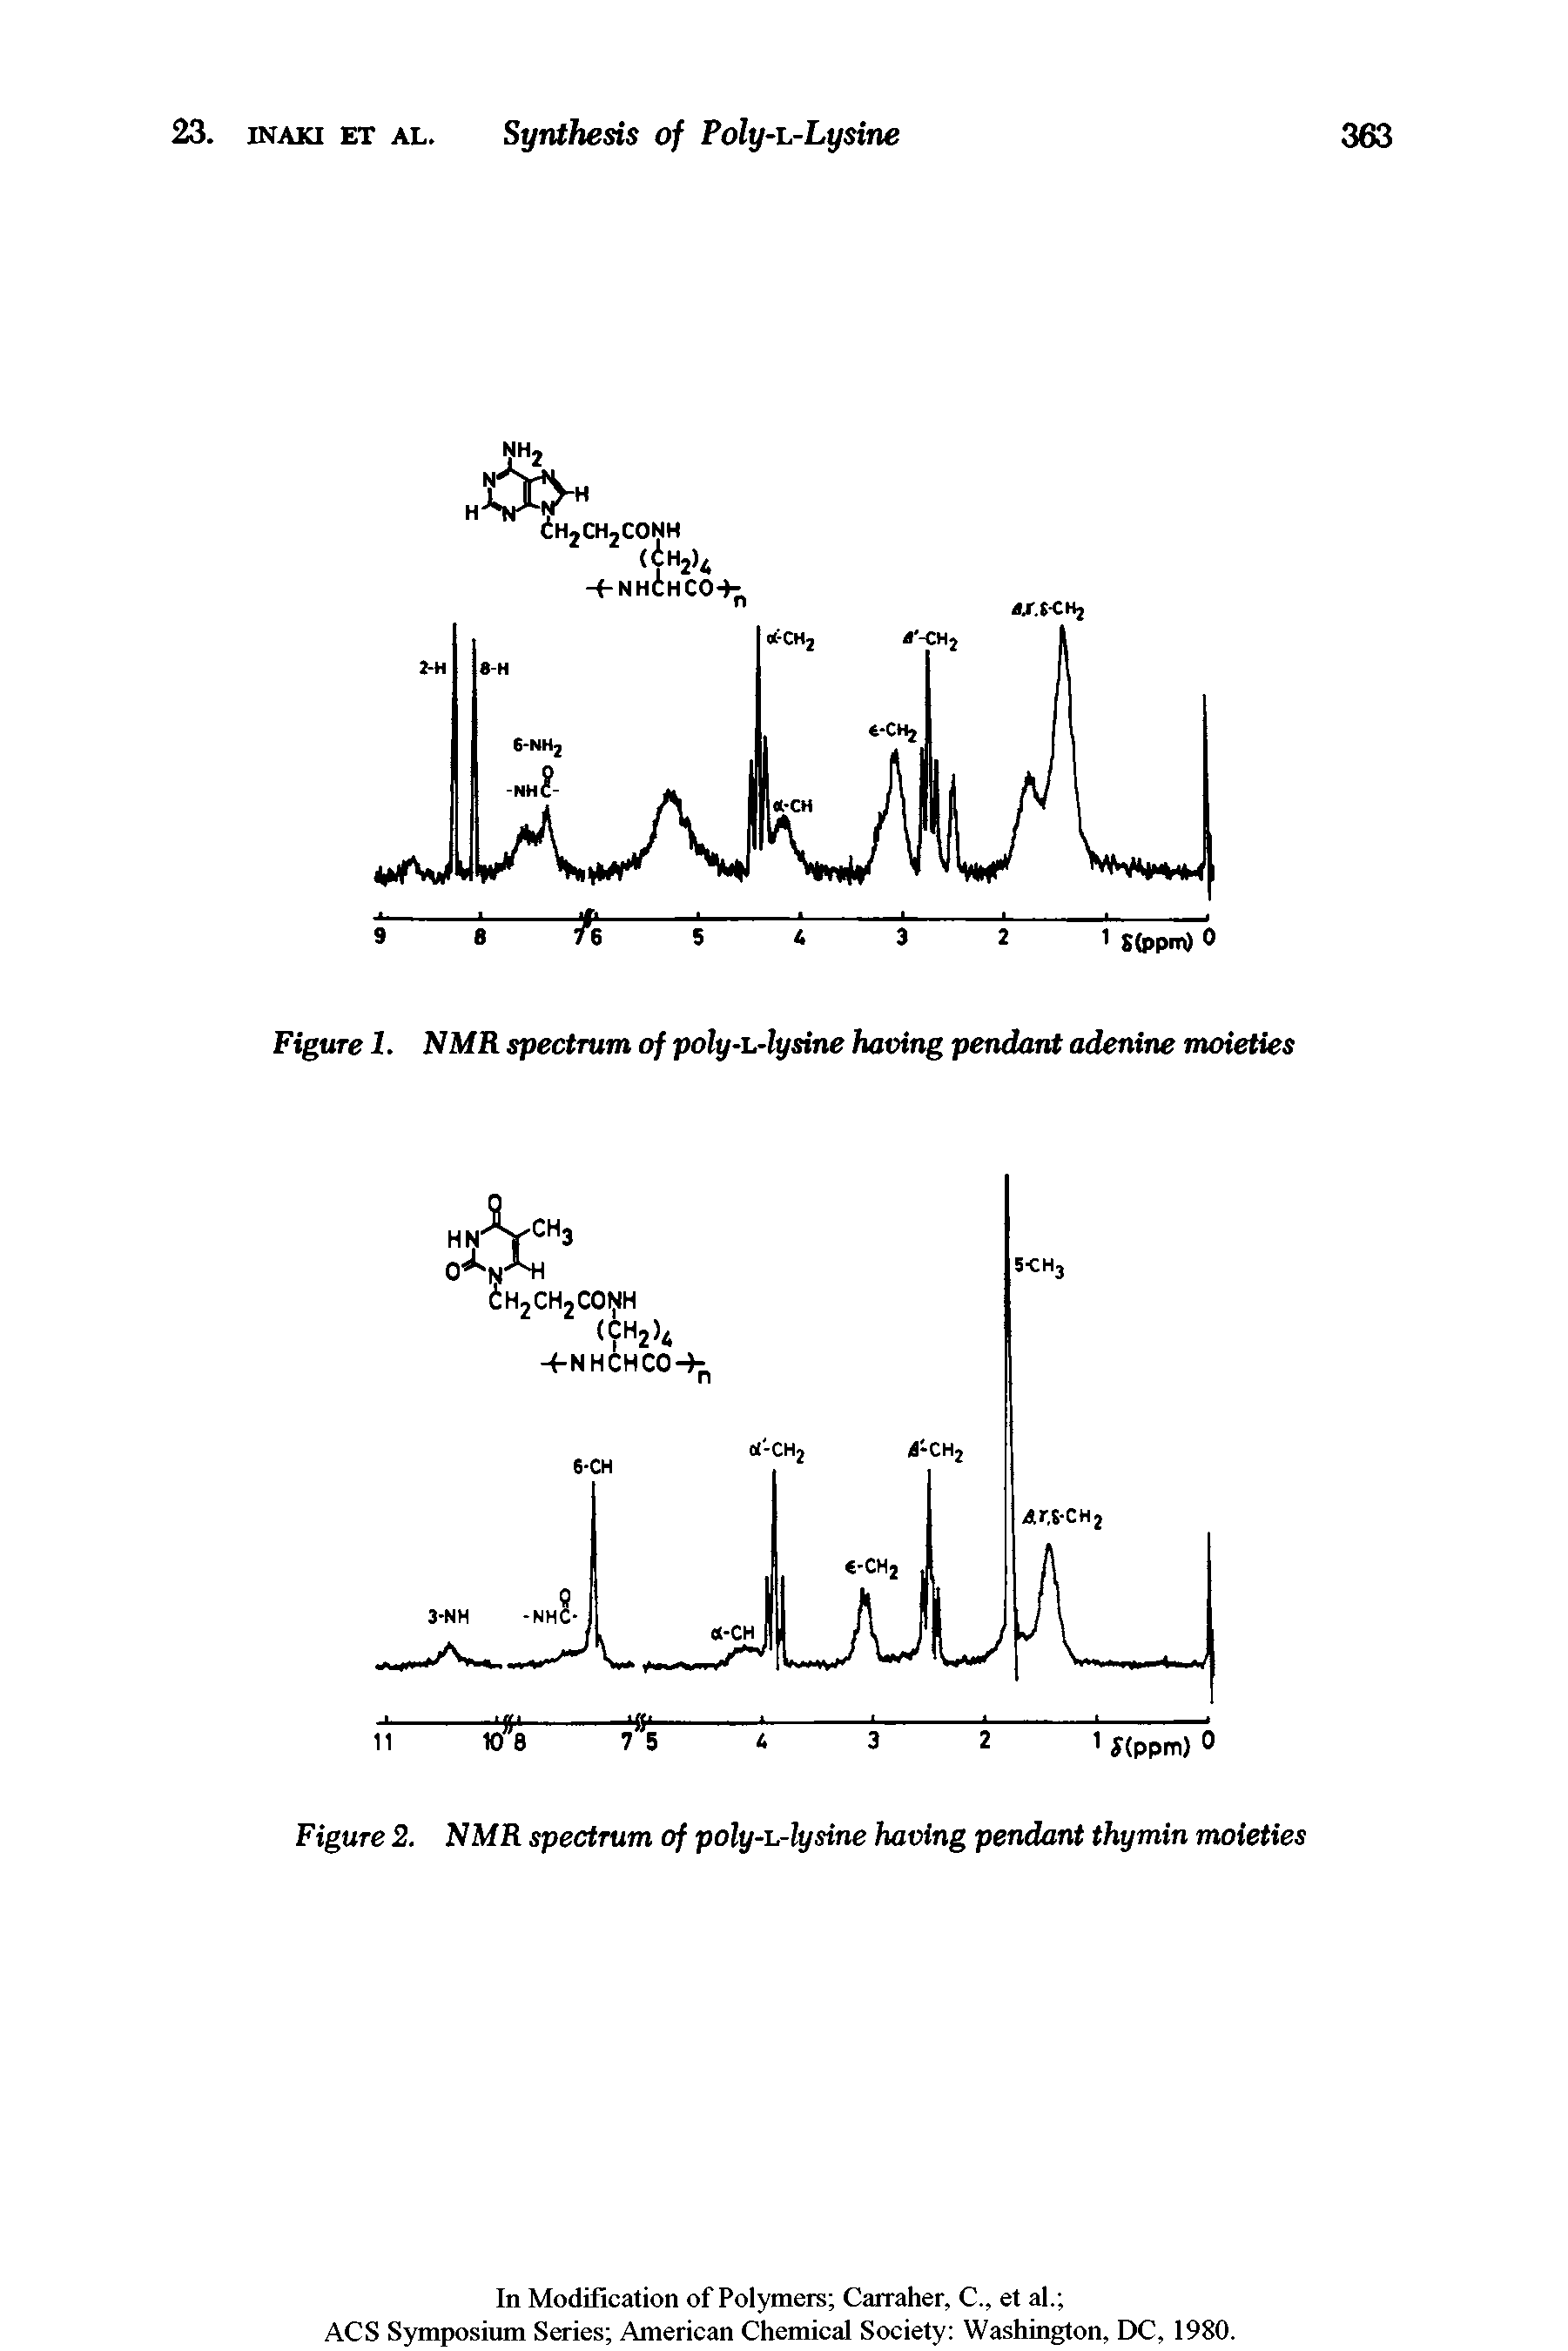 Figure 1. NMR spectrum of poly-iAysine having pendant adenine moieties...